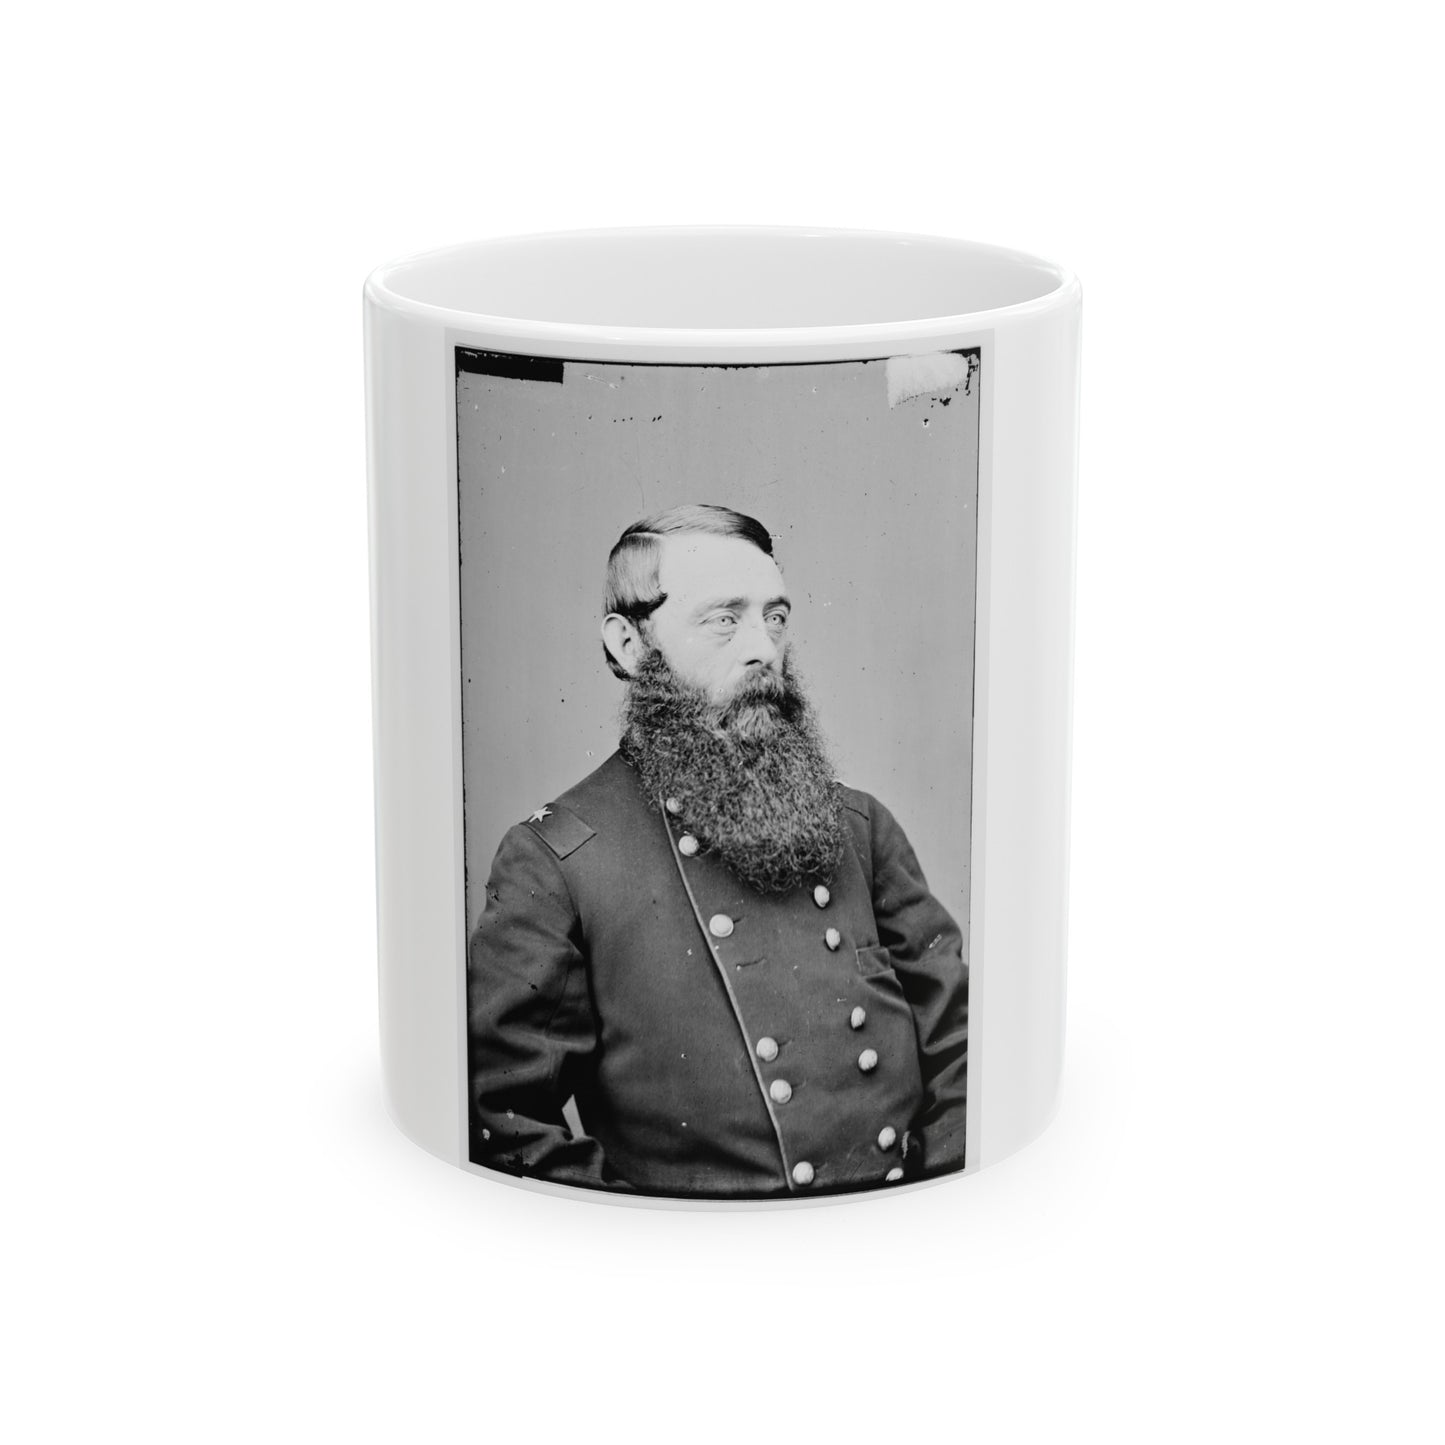 Portrait Of Brig. Gen. David Mcm. Gregg, Officer Of The Federal Army, (Maj. Gen. From Aug. 1, 1864) (U.S. Civil War) White Coffee Mug